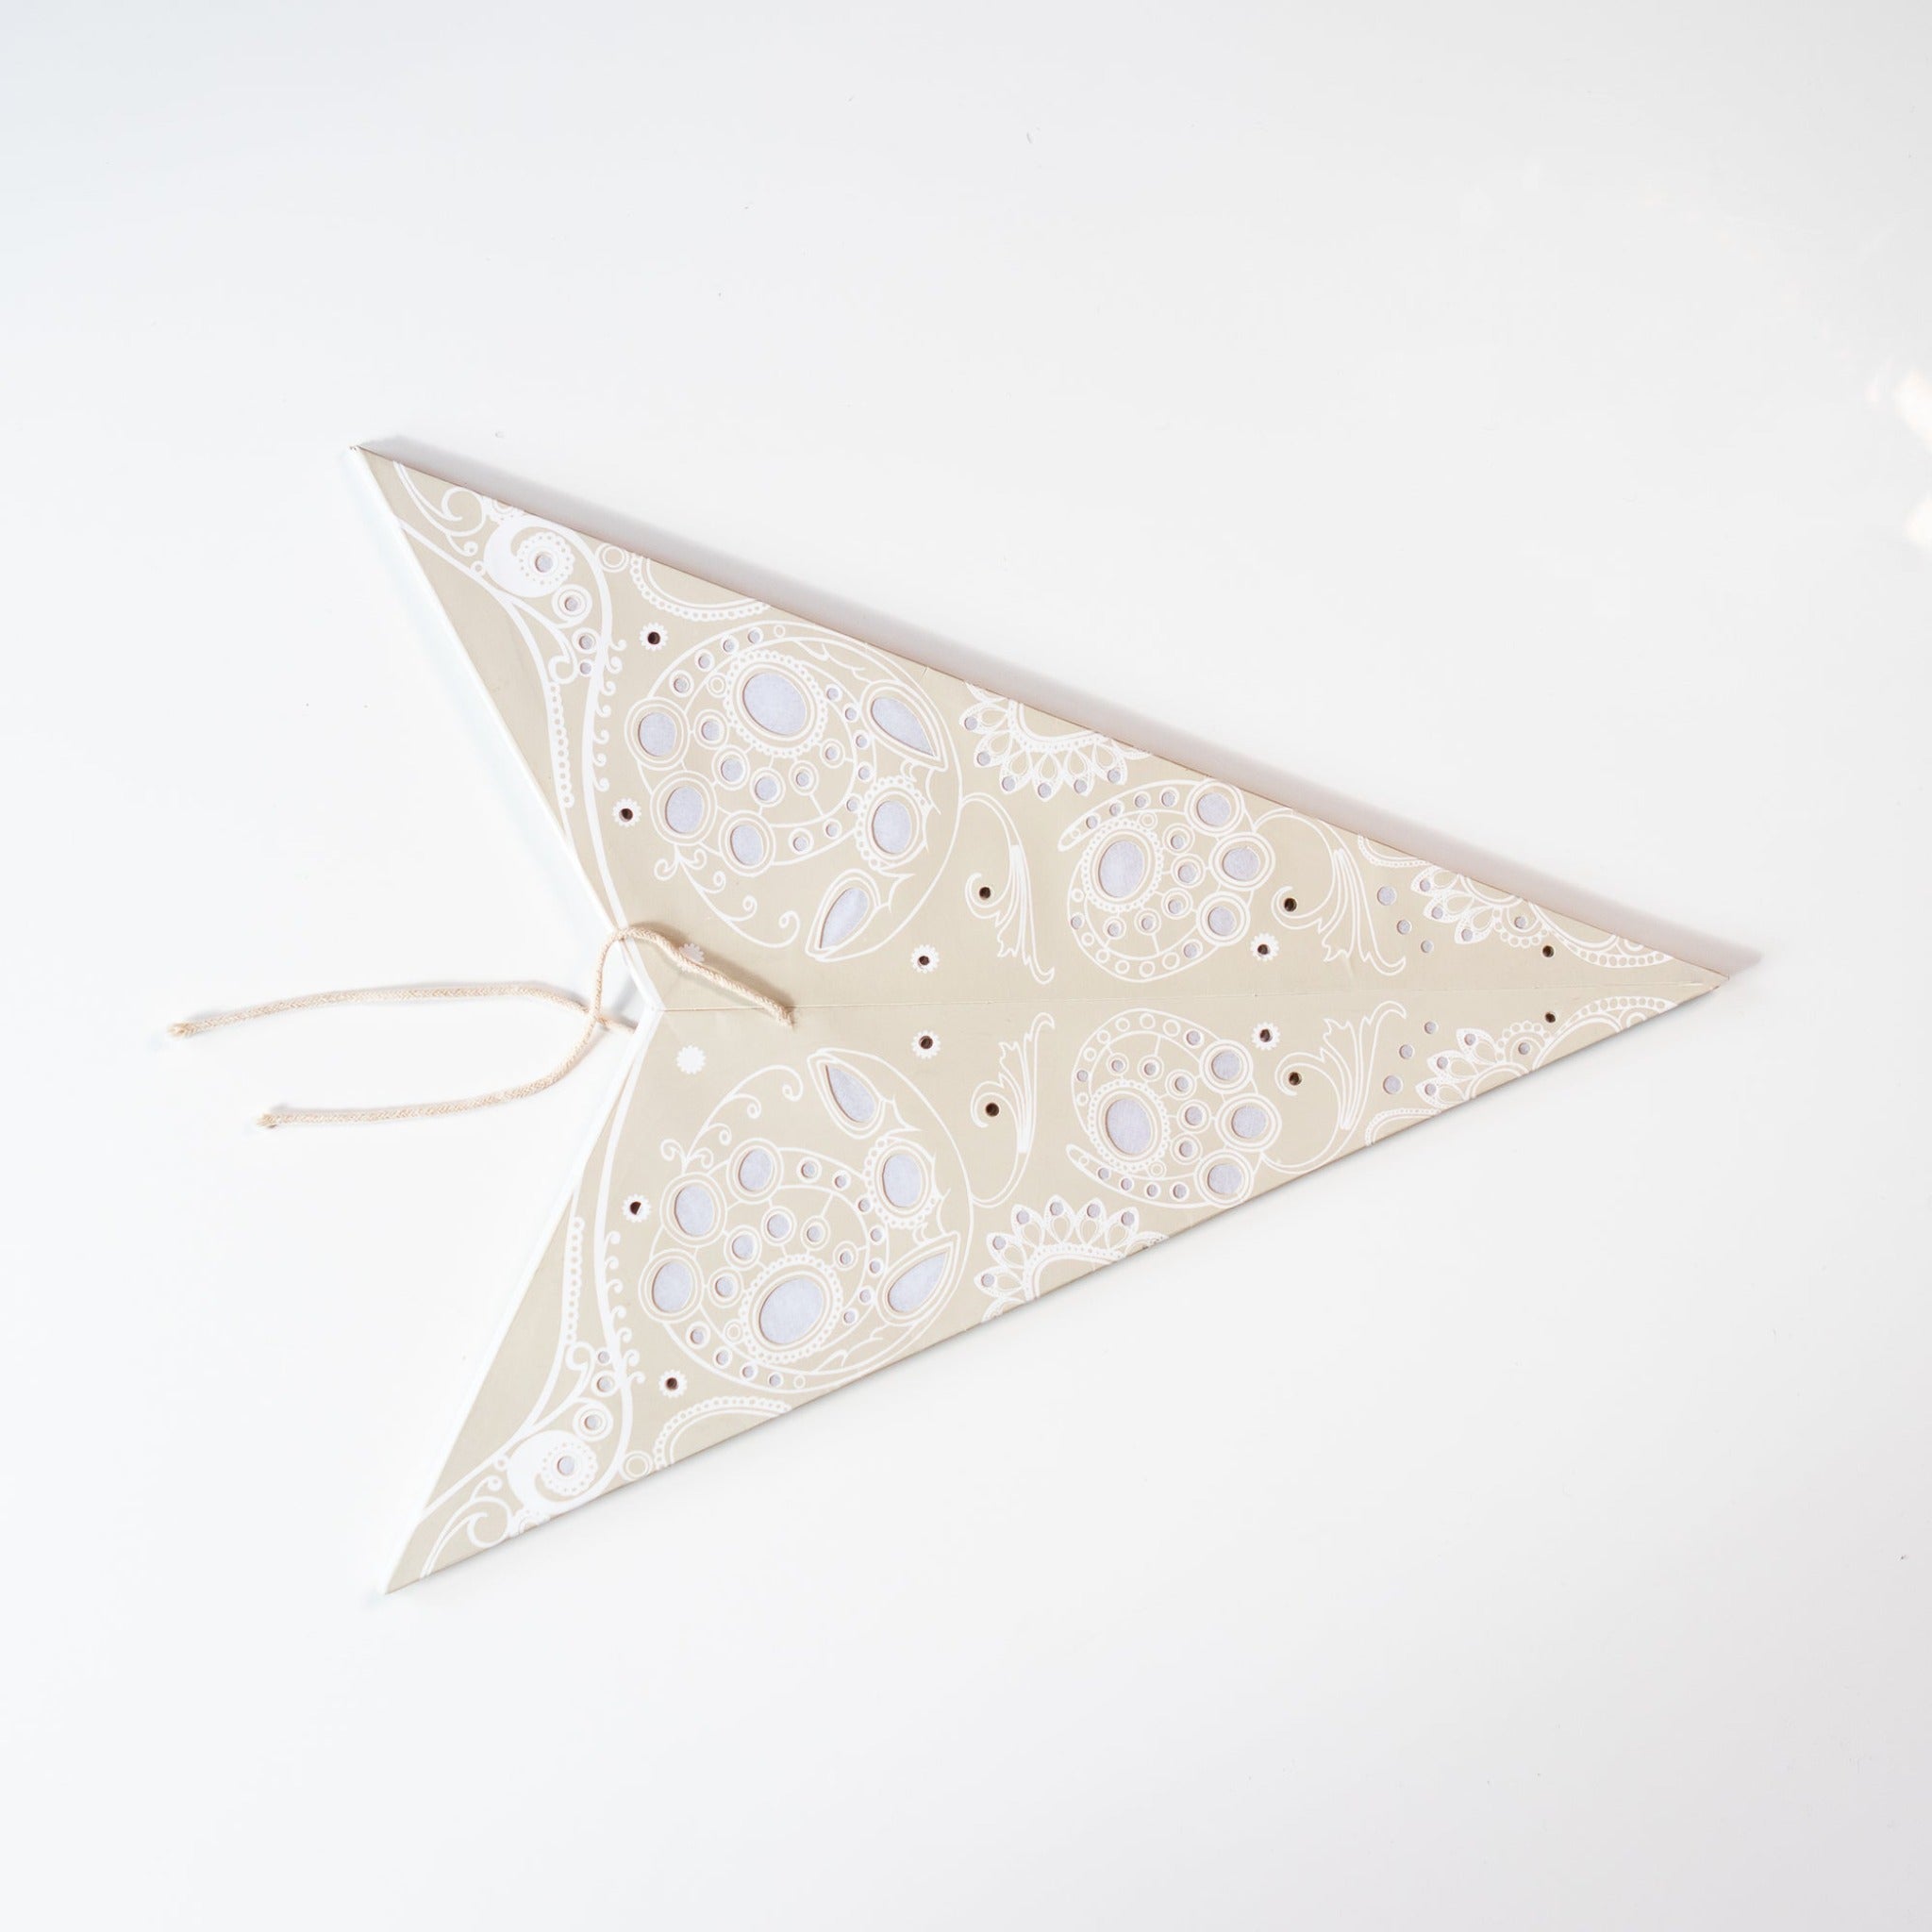 folded grey lace pattern paper star lantern